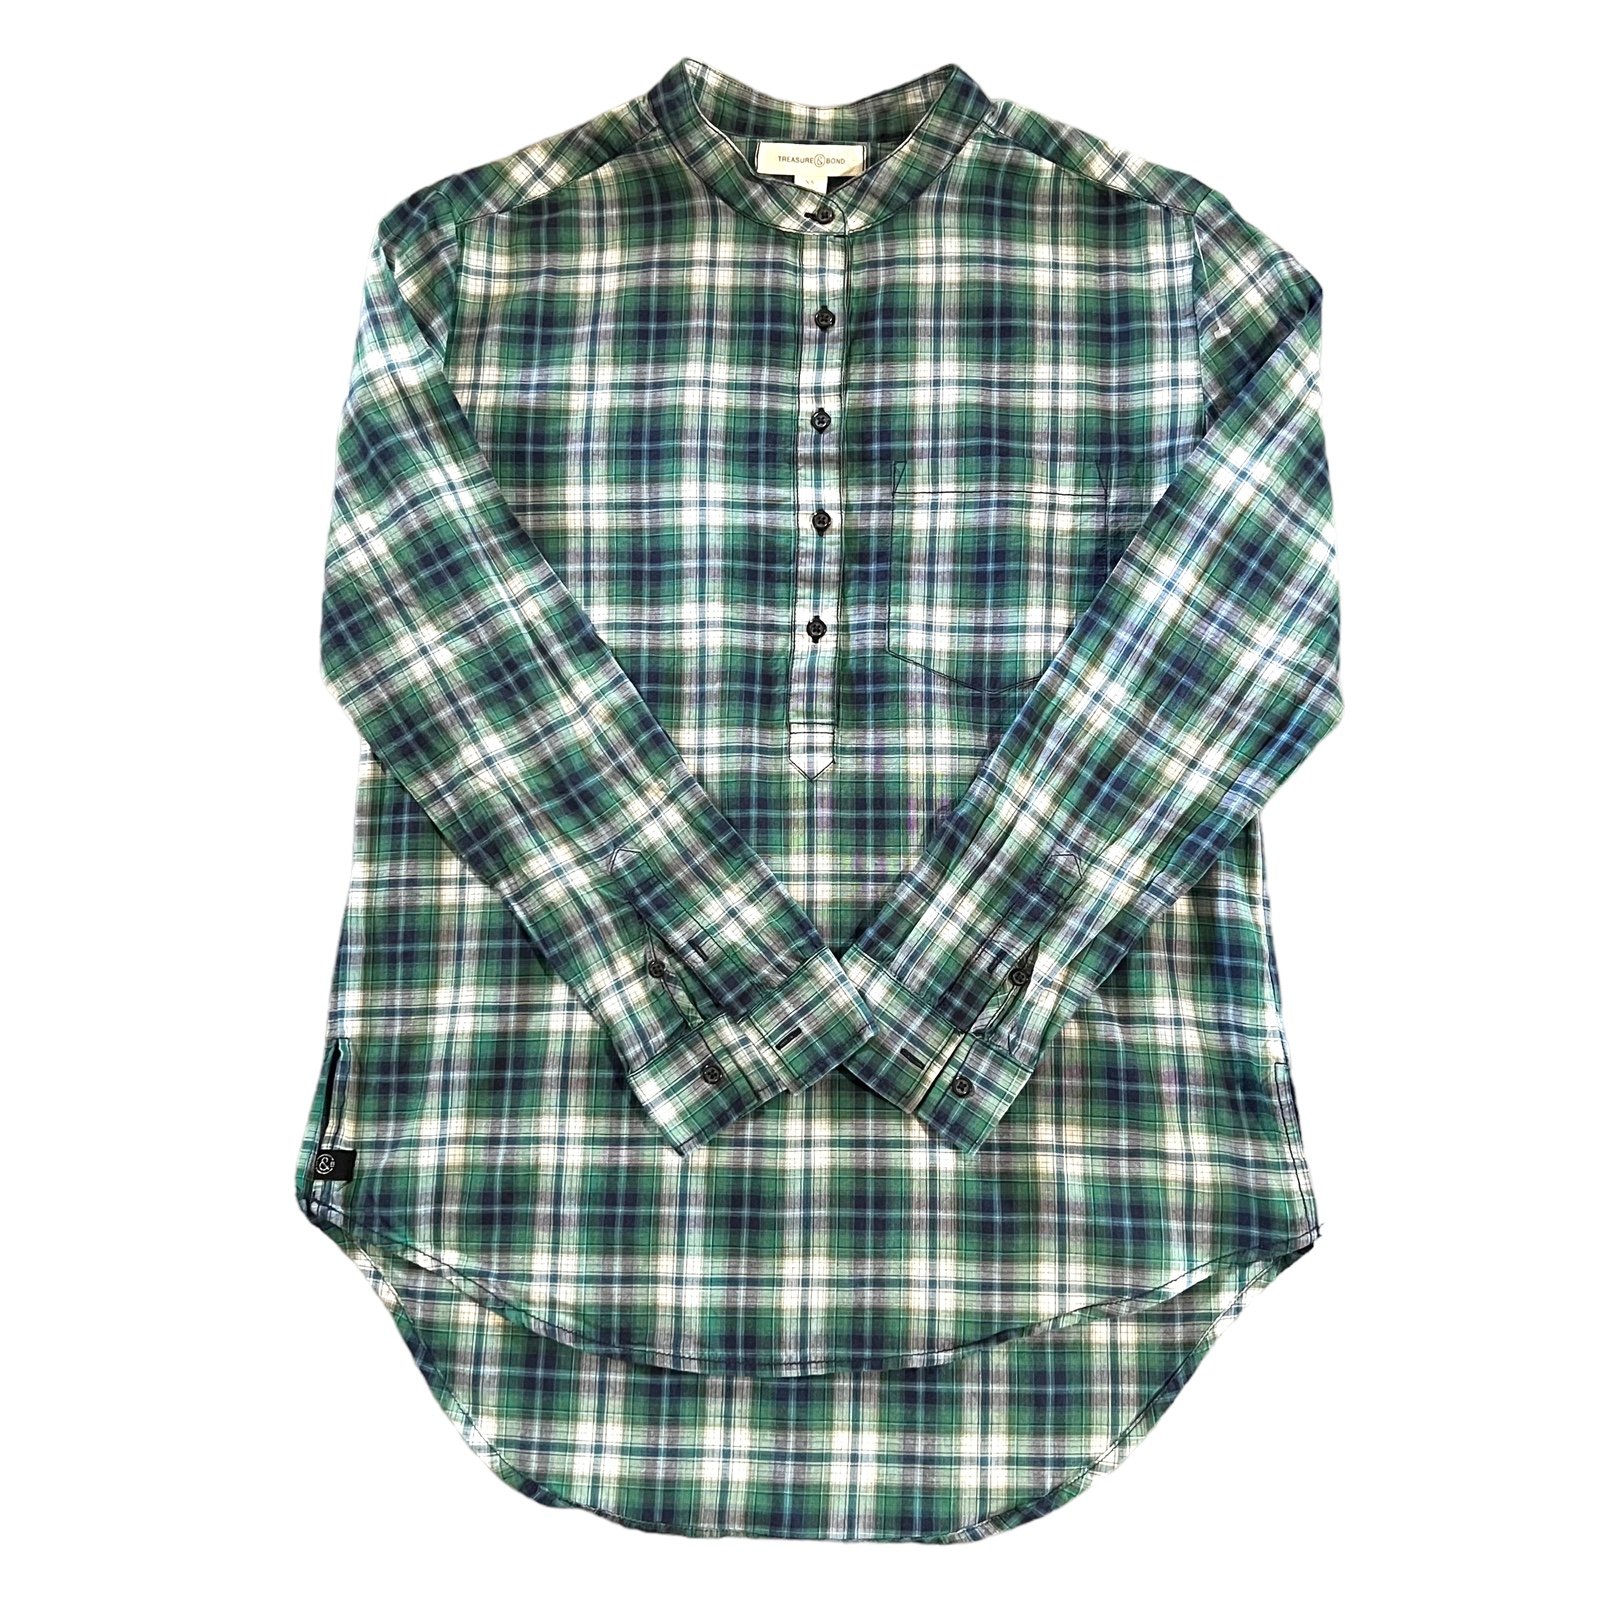 big discount Treasure & Bond Green Plaid Half Button Shirt Women’s Size XS mRB4HffP7 Store Online